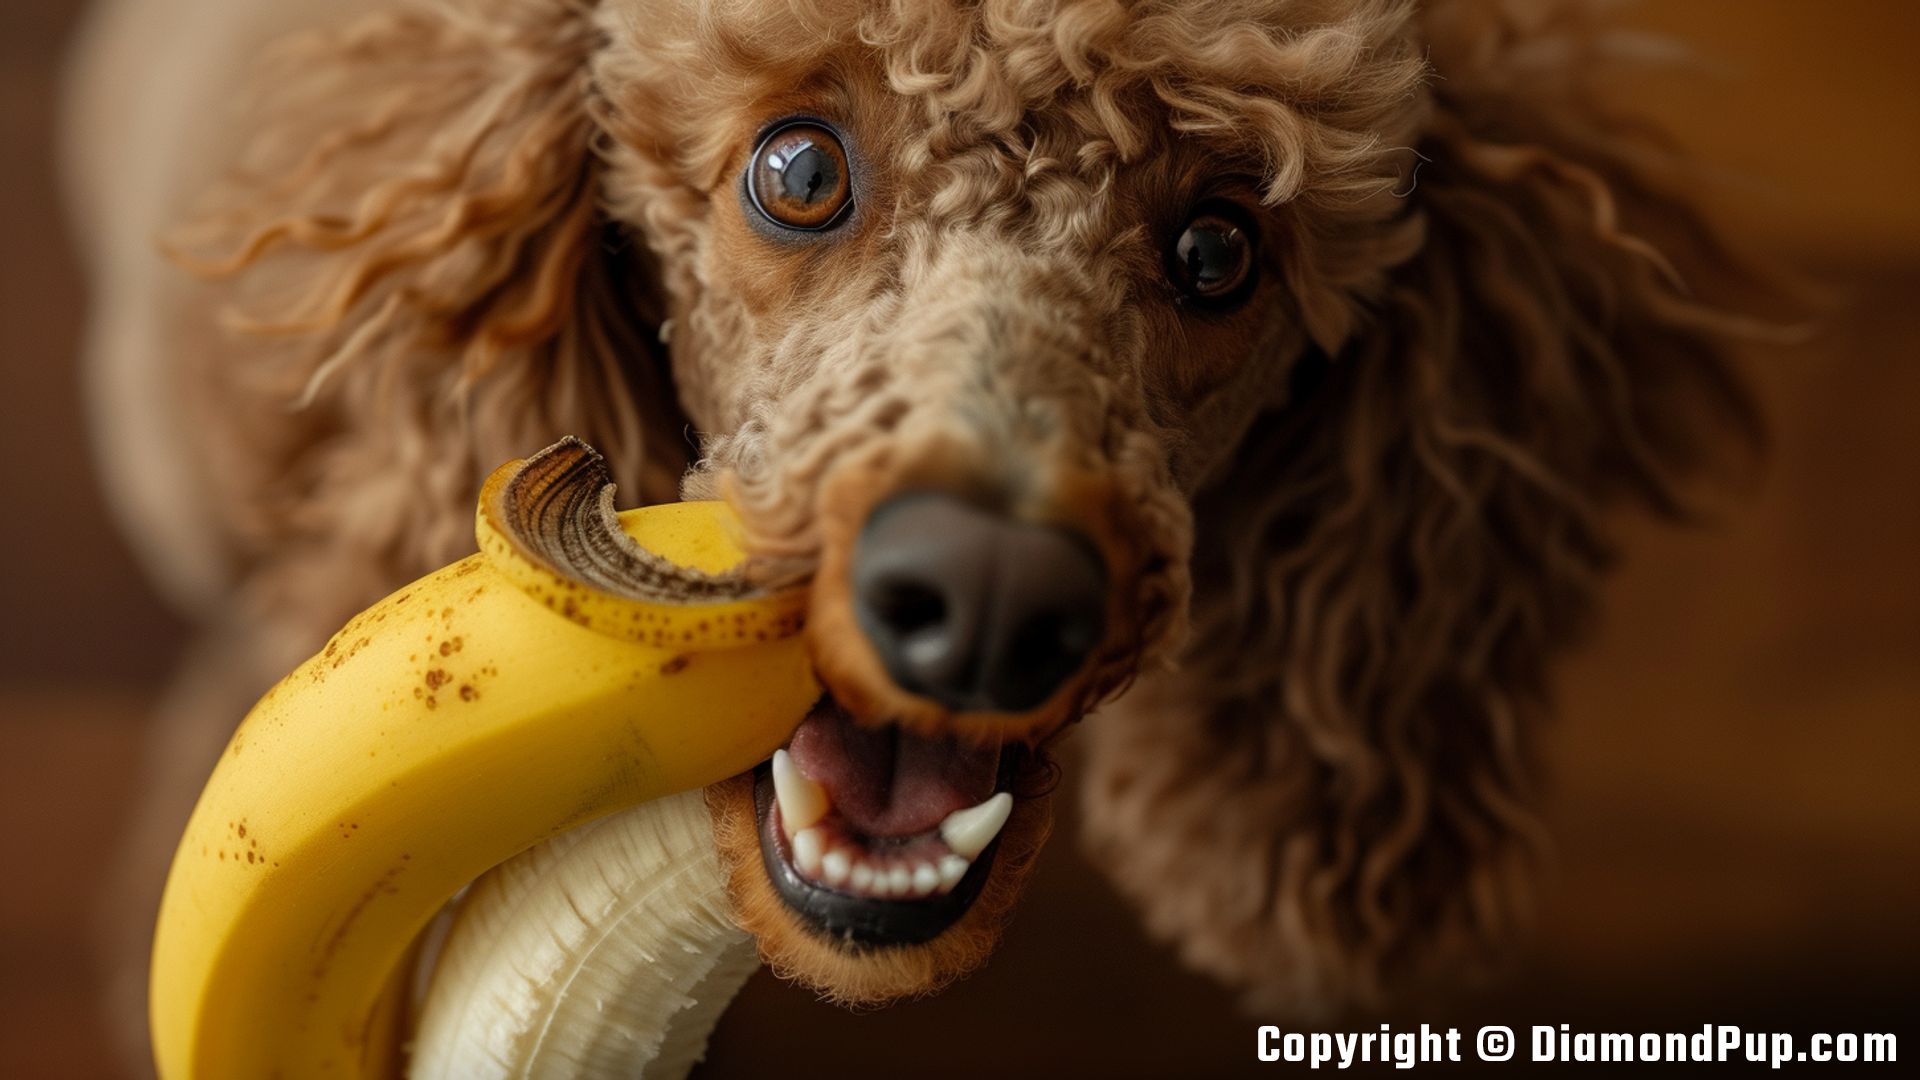 Photo of a Playful Poodle Eating Banana